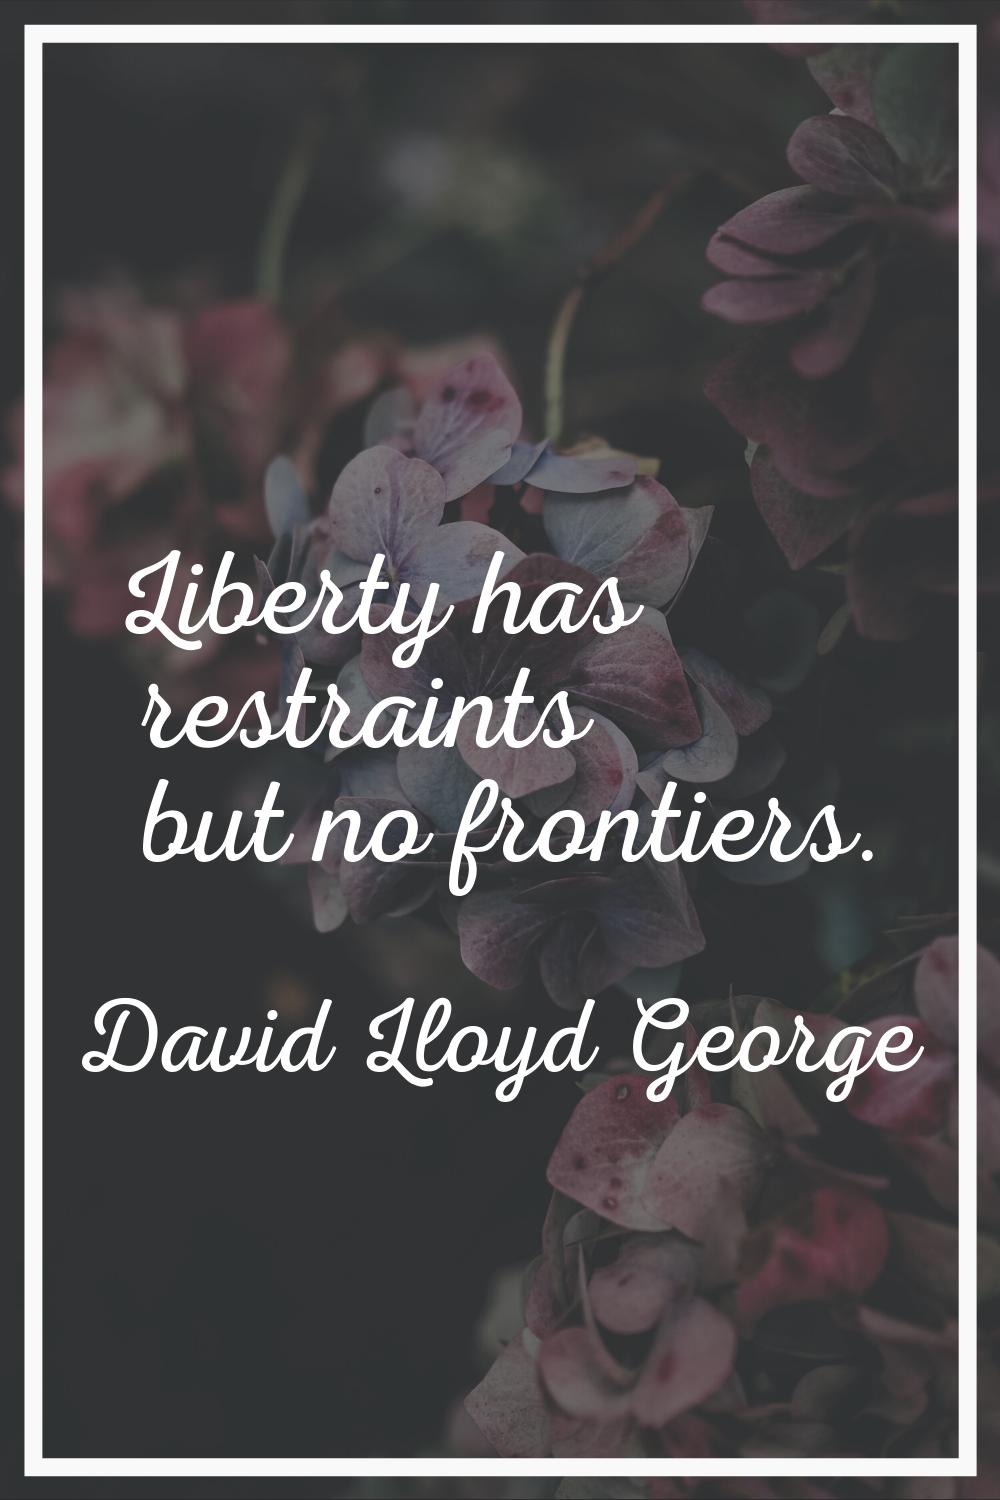 Liberty has restraints but no frontiers.